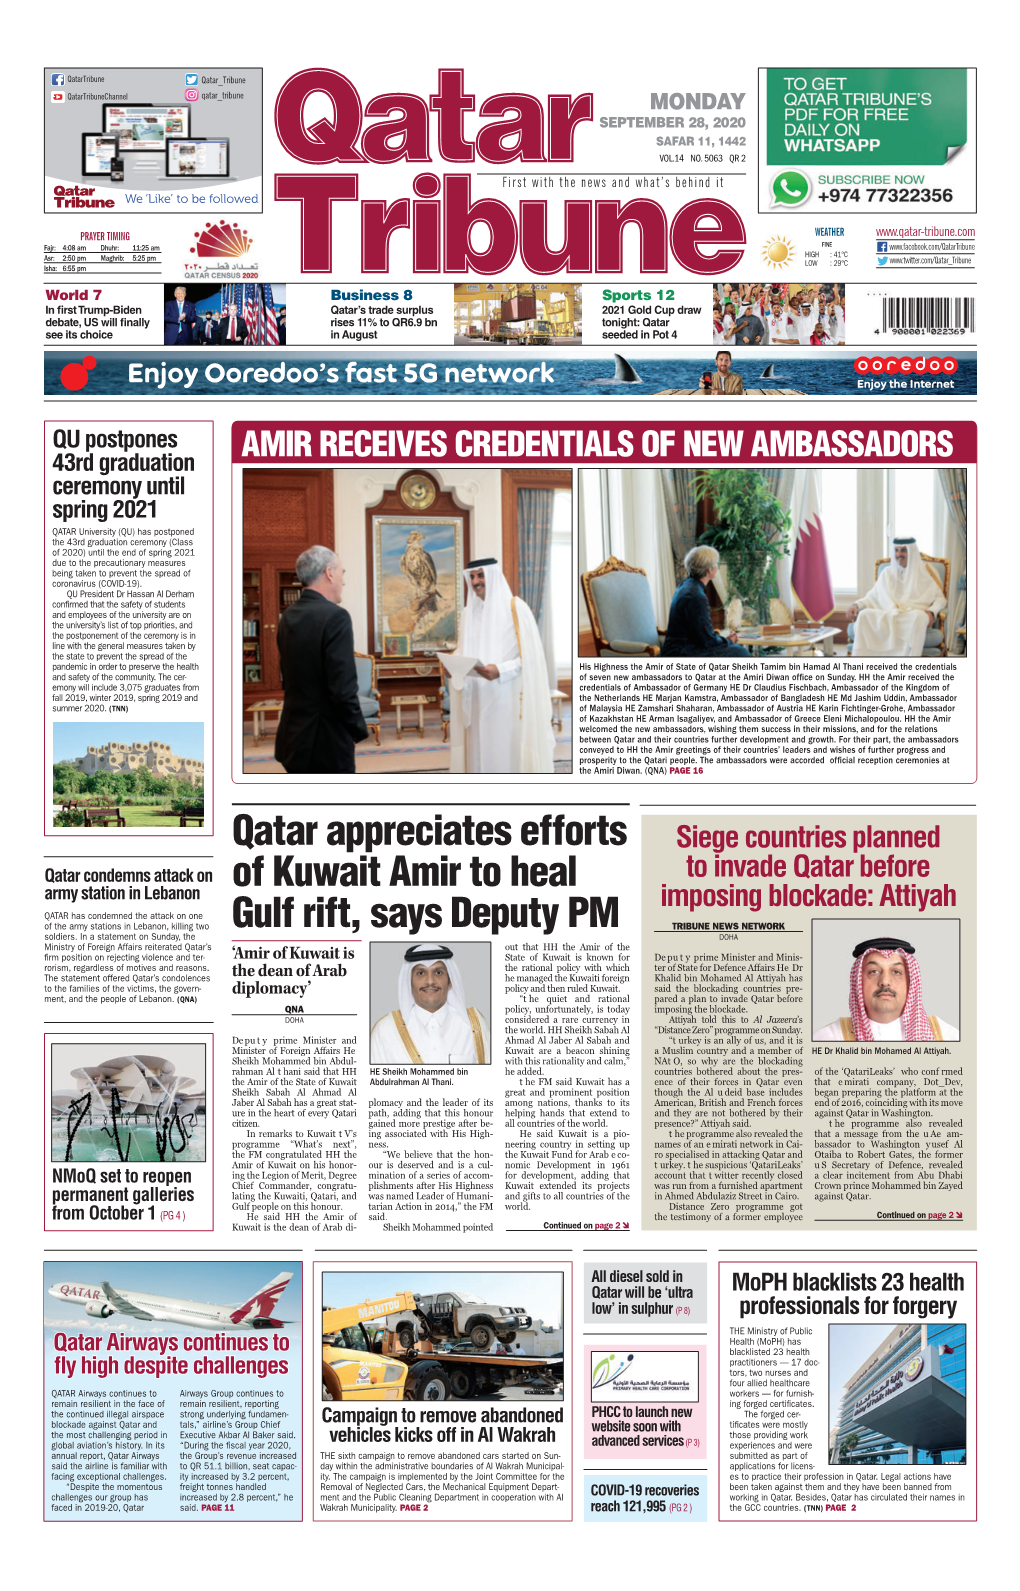 Qatar Appreciates Efforts of Kuwait Amir to Heal Gulf Rift, Says Deputy Pm